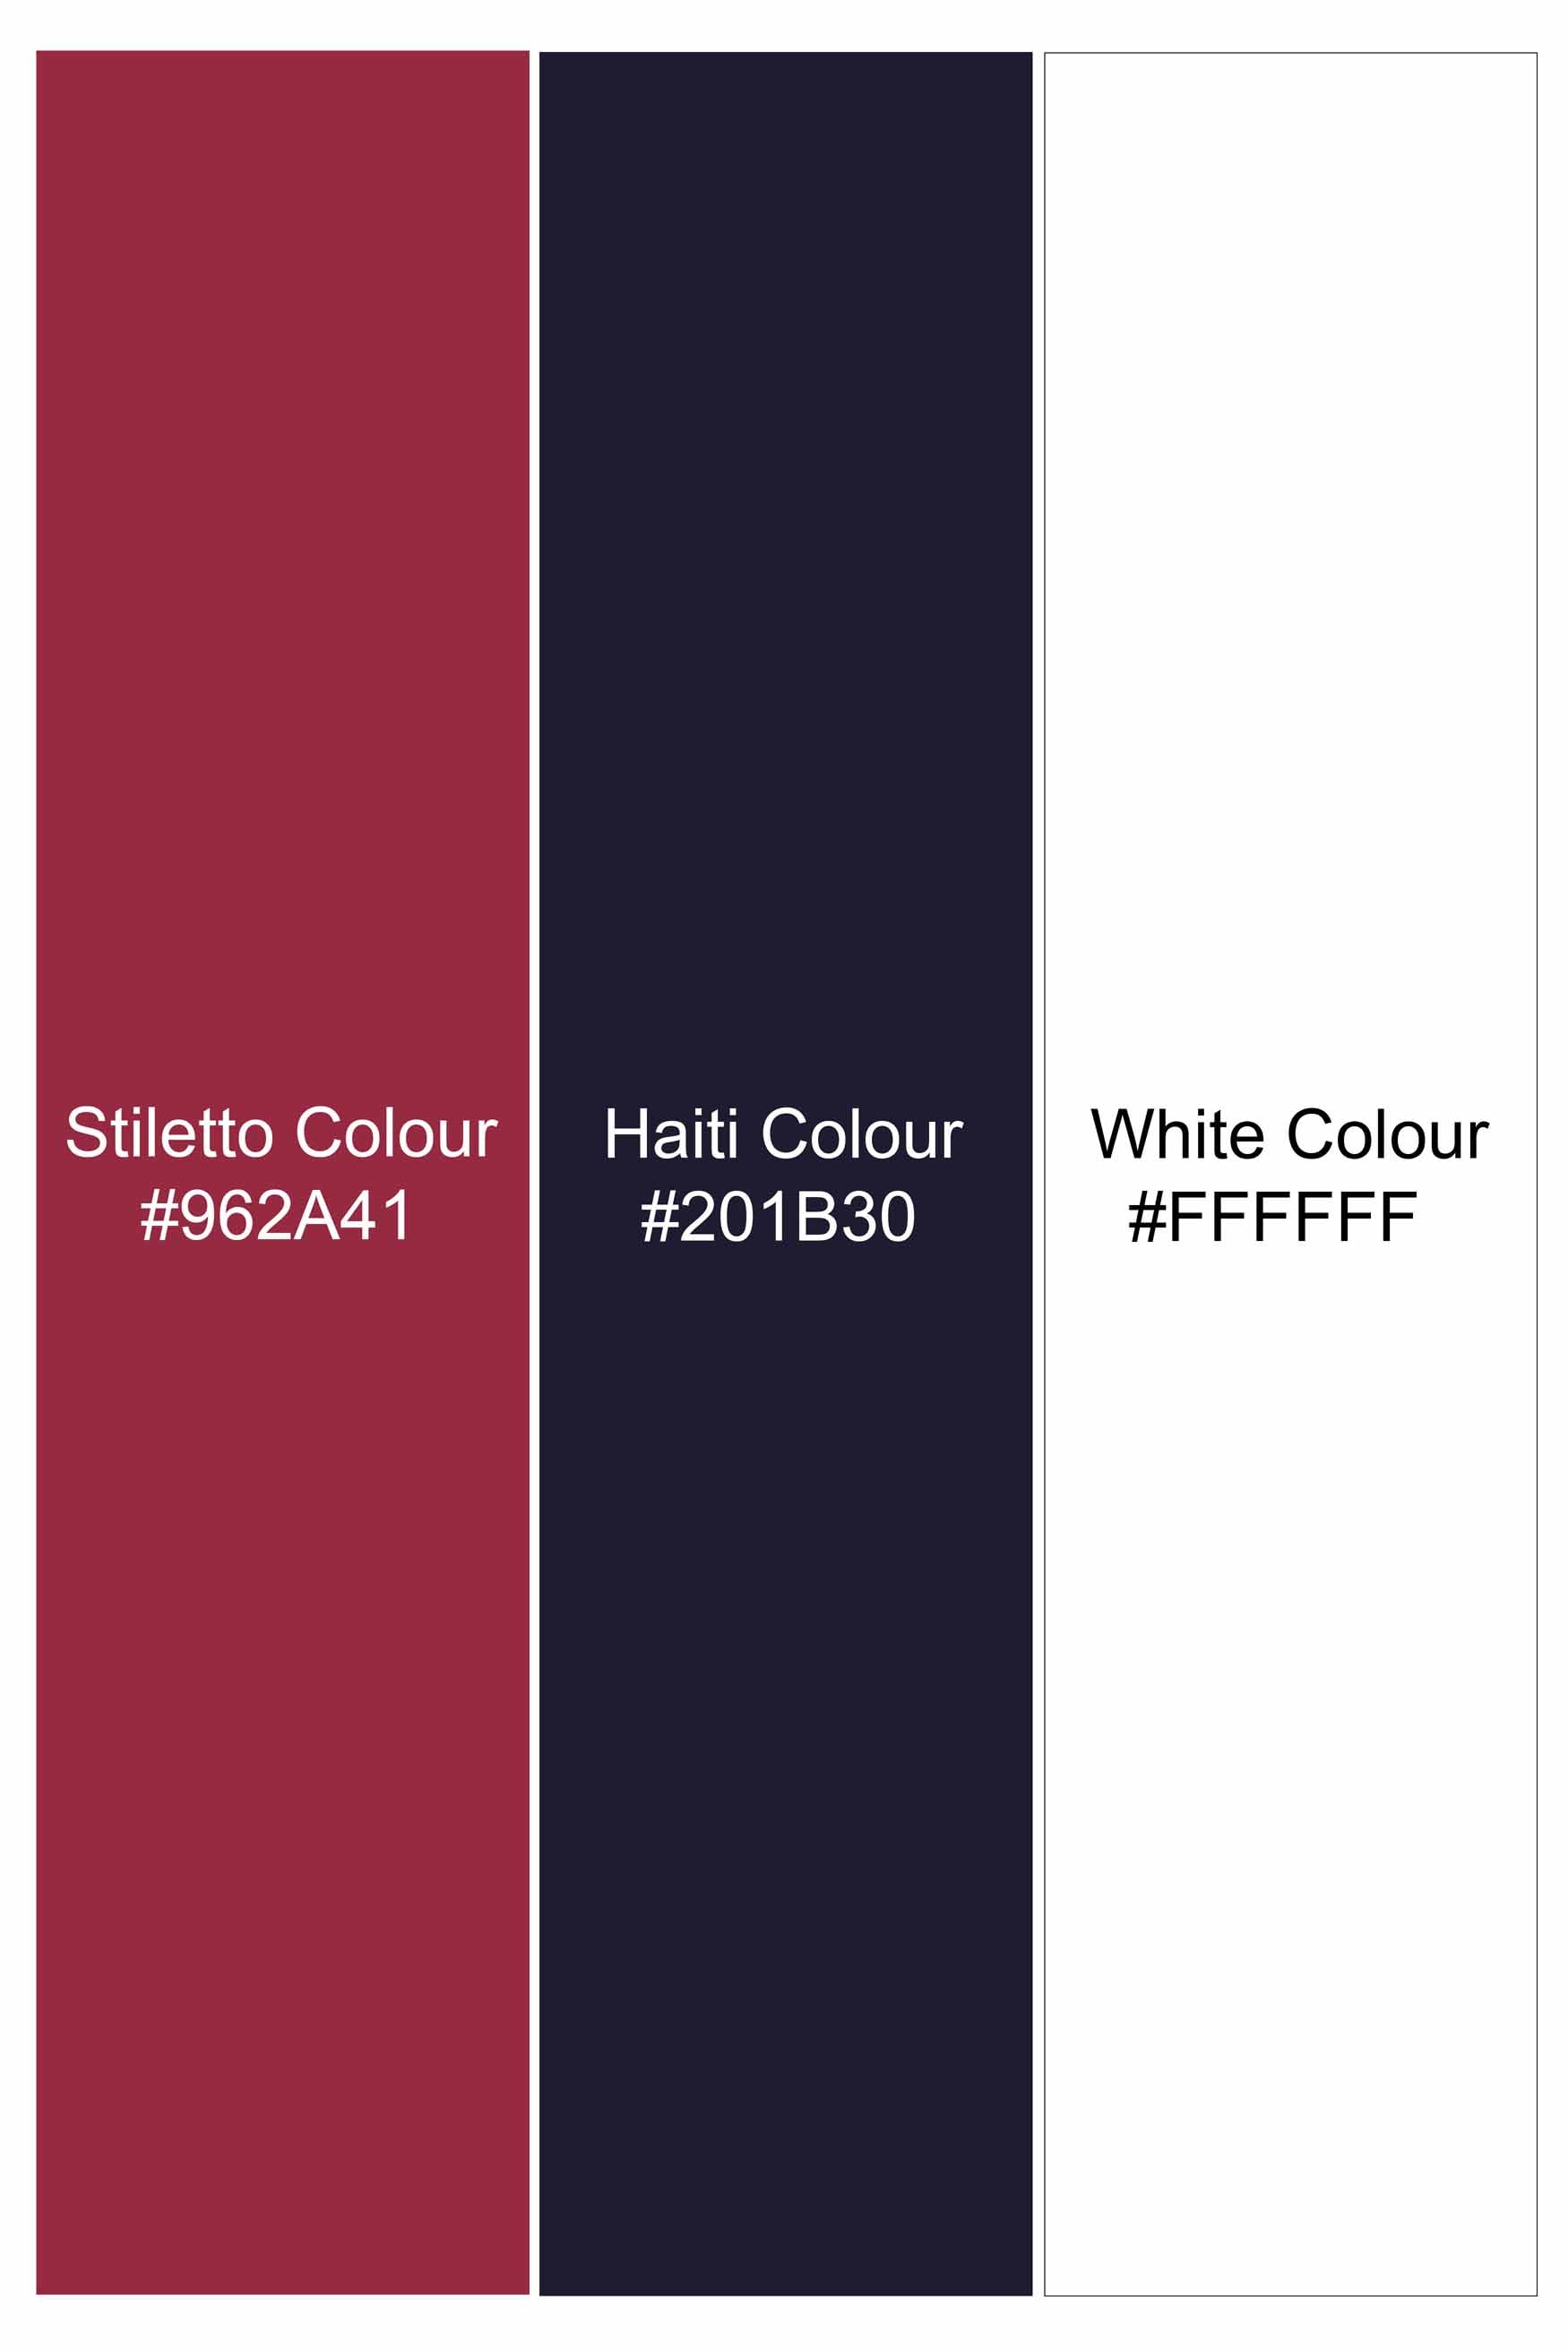 Stiletto Red and Haiti Blue Plaid With Brand Name Patchwork Twill Premium Cotton Designer Shirt 5662-BLK-E278-38, 5662-BLK-E278-H-38, 5662-BLK-E278-39, 5662-BLK-E278-H-39, 5662-BLK-E278-40, 5662-BLK-E278-H-40, 5662-BLK-E278-42, 5662-BLK-E278-H-42, 5662-BLK-E278-44, 5662-BLK-E278-H-44, 5662-BLK-E278-46, 5662-BLK-E278-H-46, 5662-BLK-E278-48, 5662-BLK-E278-H-48, 5662-BLK-E278-50, 5662-BLK-E278-H-50, 5662-BLK-E278-52, 5662-BLK-E278-H-52